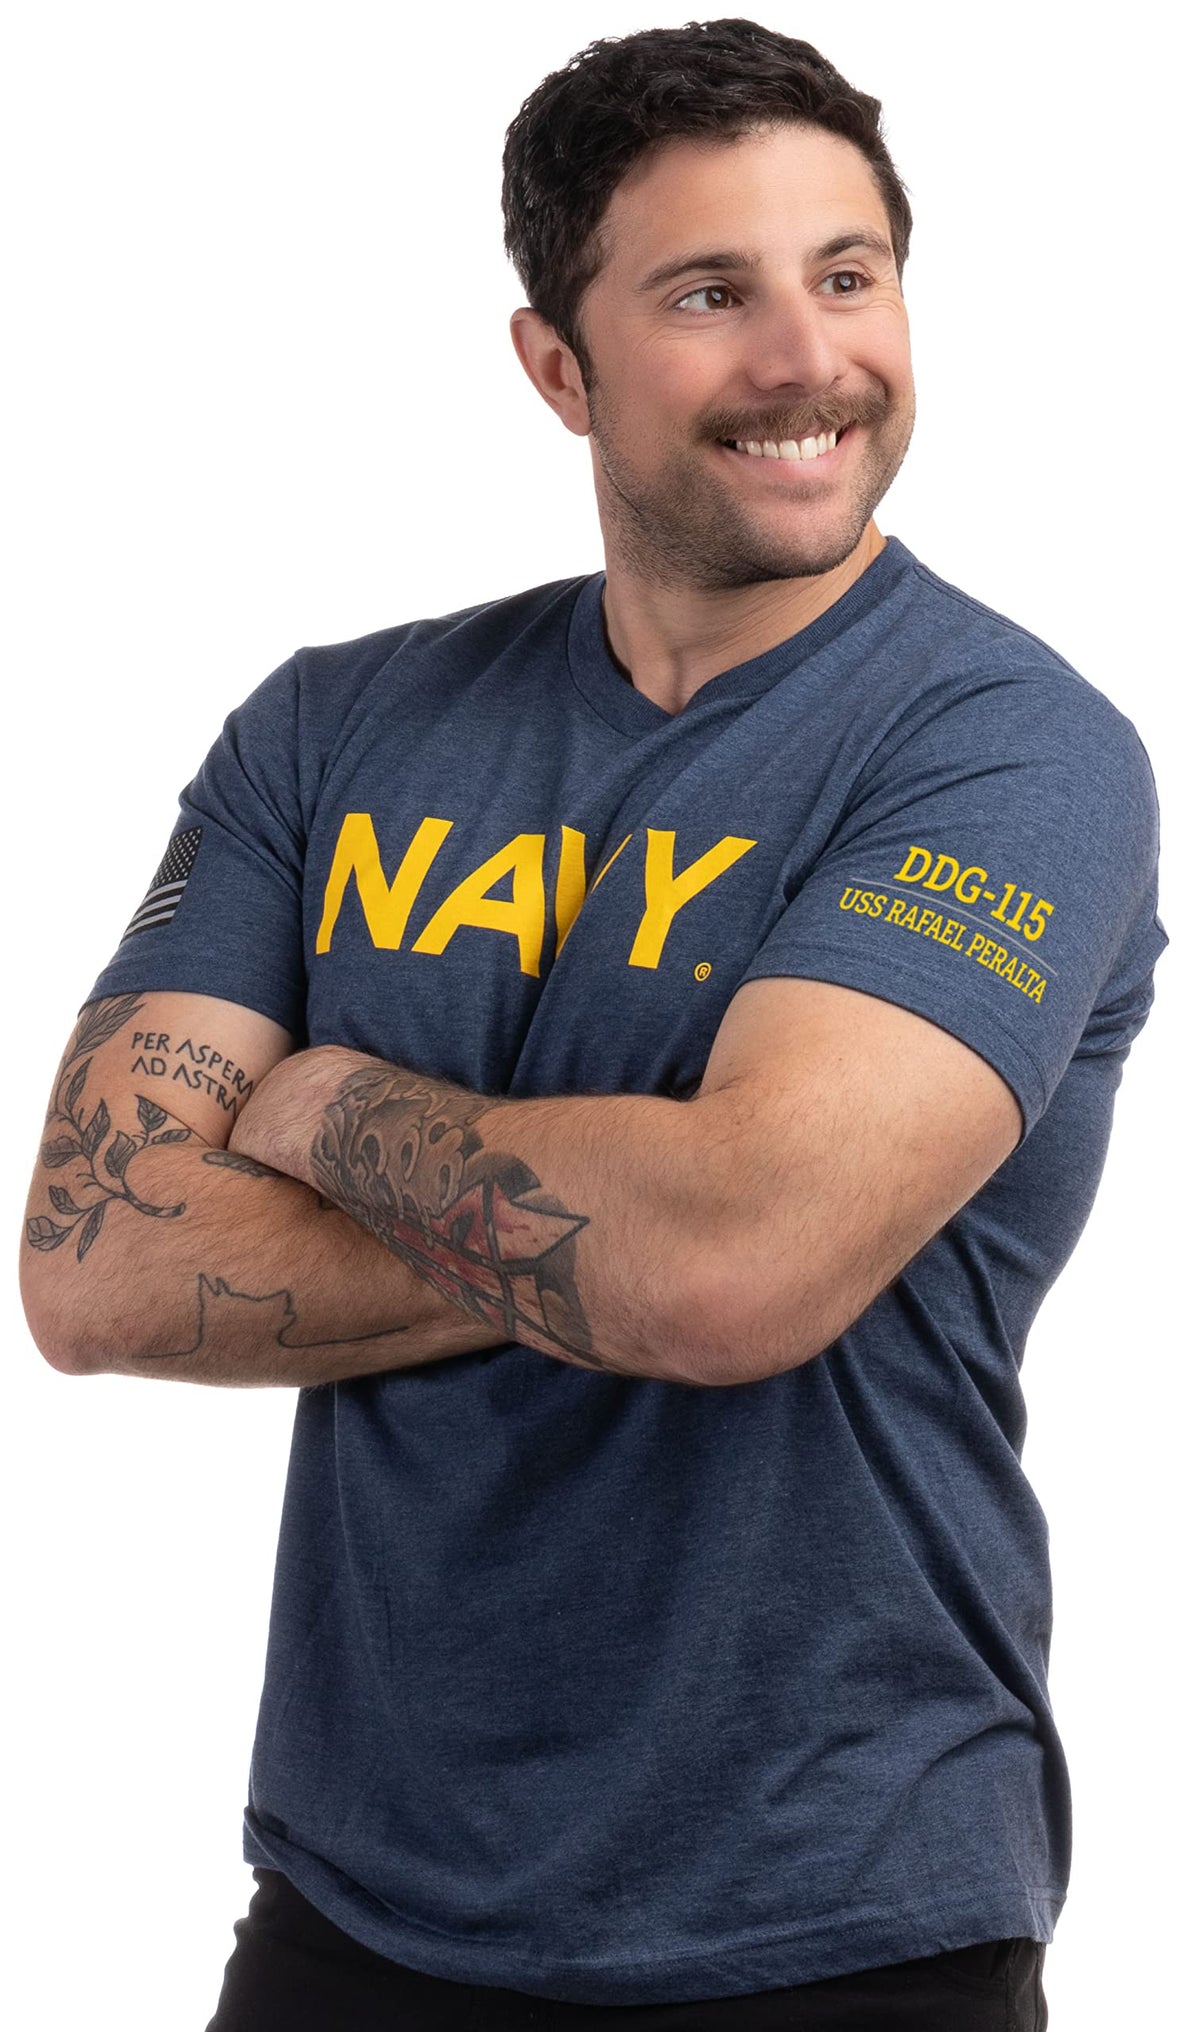 USS Rafael Peralta, DDG-115 | U.S. Navy Sailor Veteran USN United States Naval T-shirt for Men Women